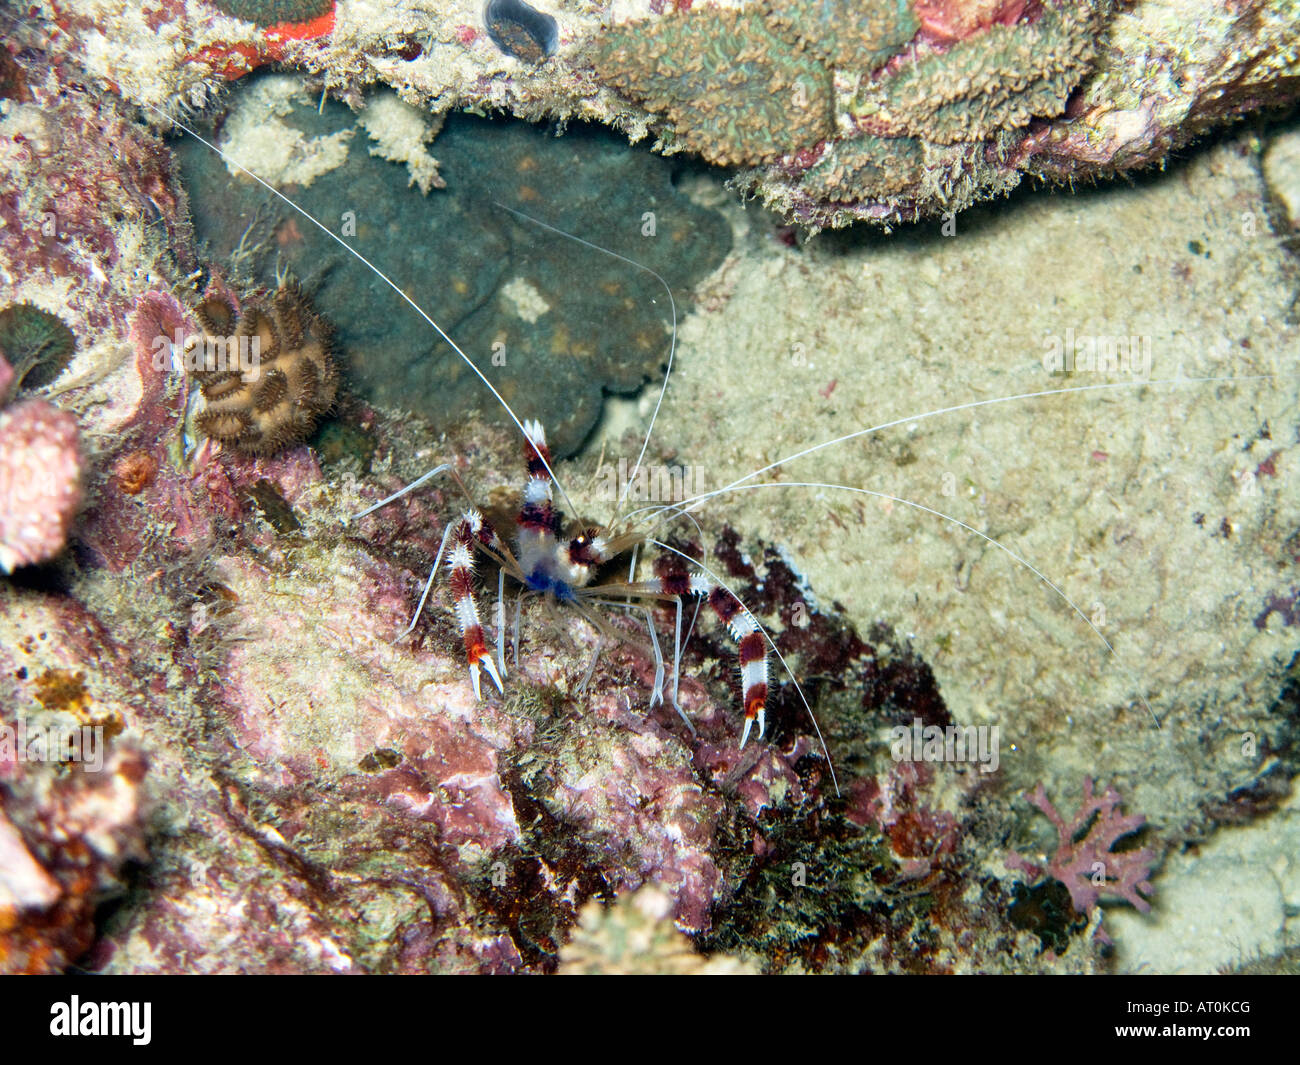 Banded boxer shrimp, Stenopus hispidus, closeup February 2008, Surin islands, Andaman sea, Thailand Stock Photo